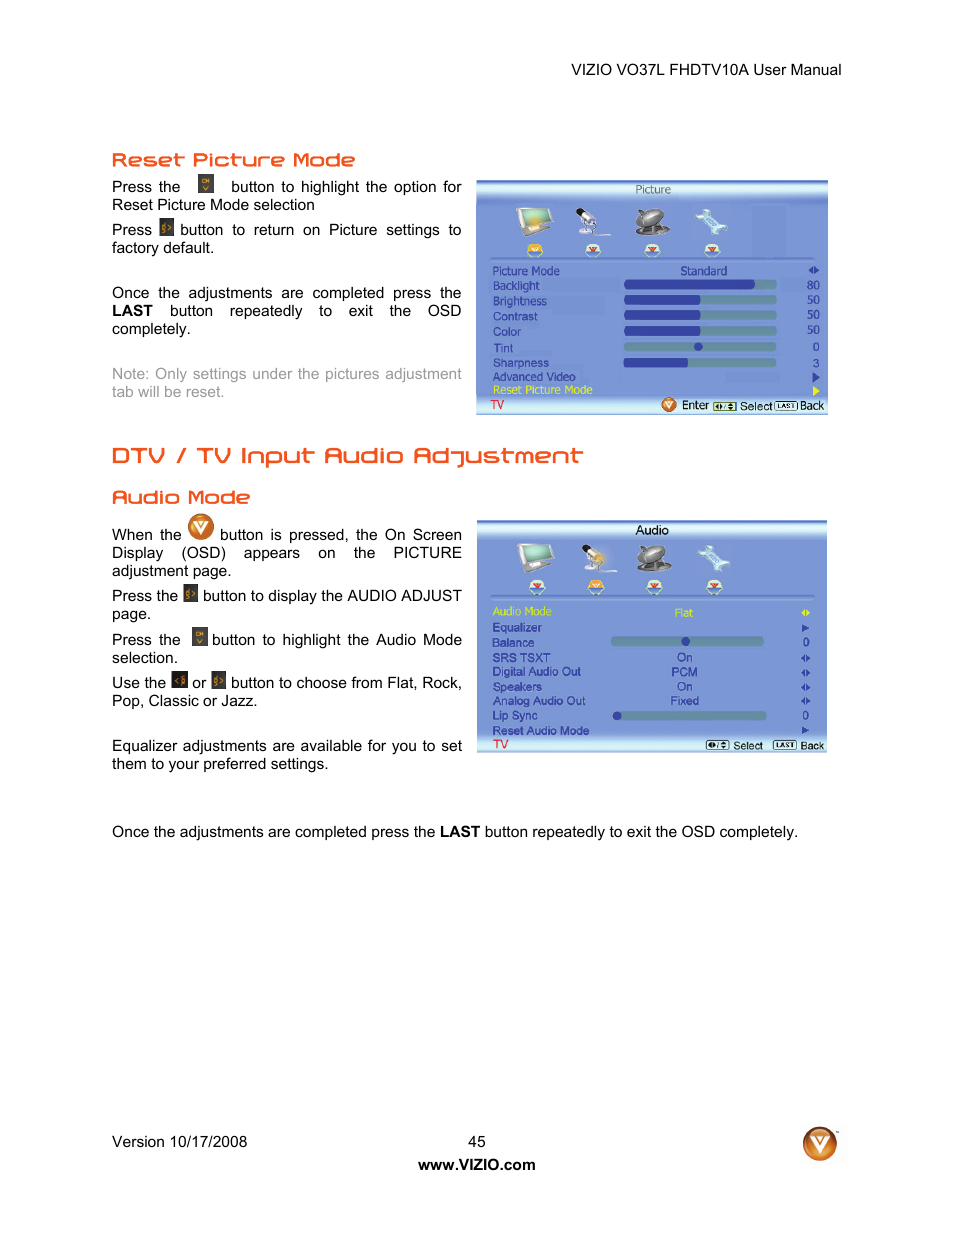 Dtv / tv input audio adjustment | Vizio VO37L FHDTV10A User Manual | Page 45 / 80